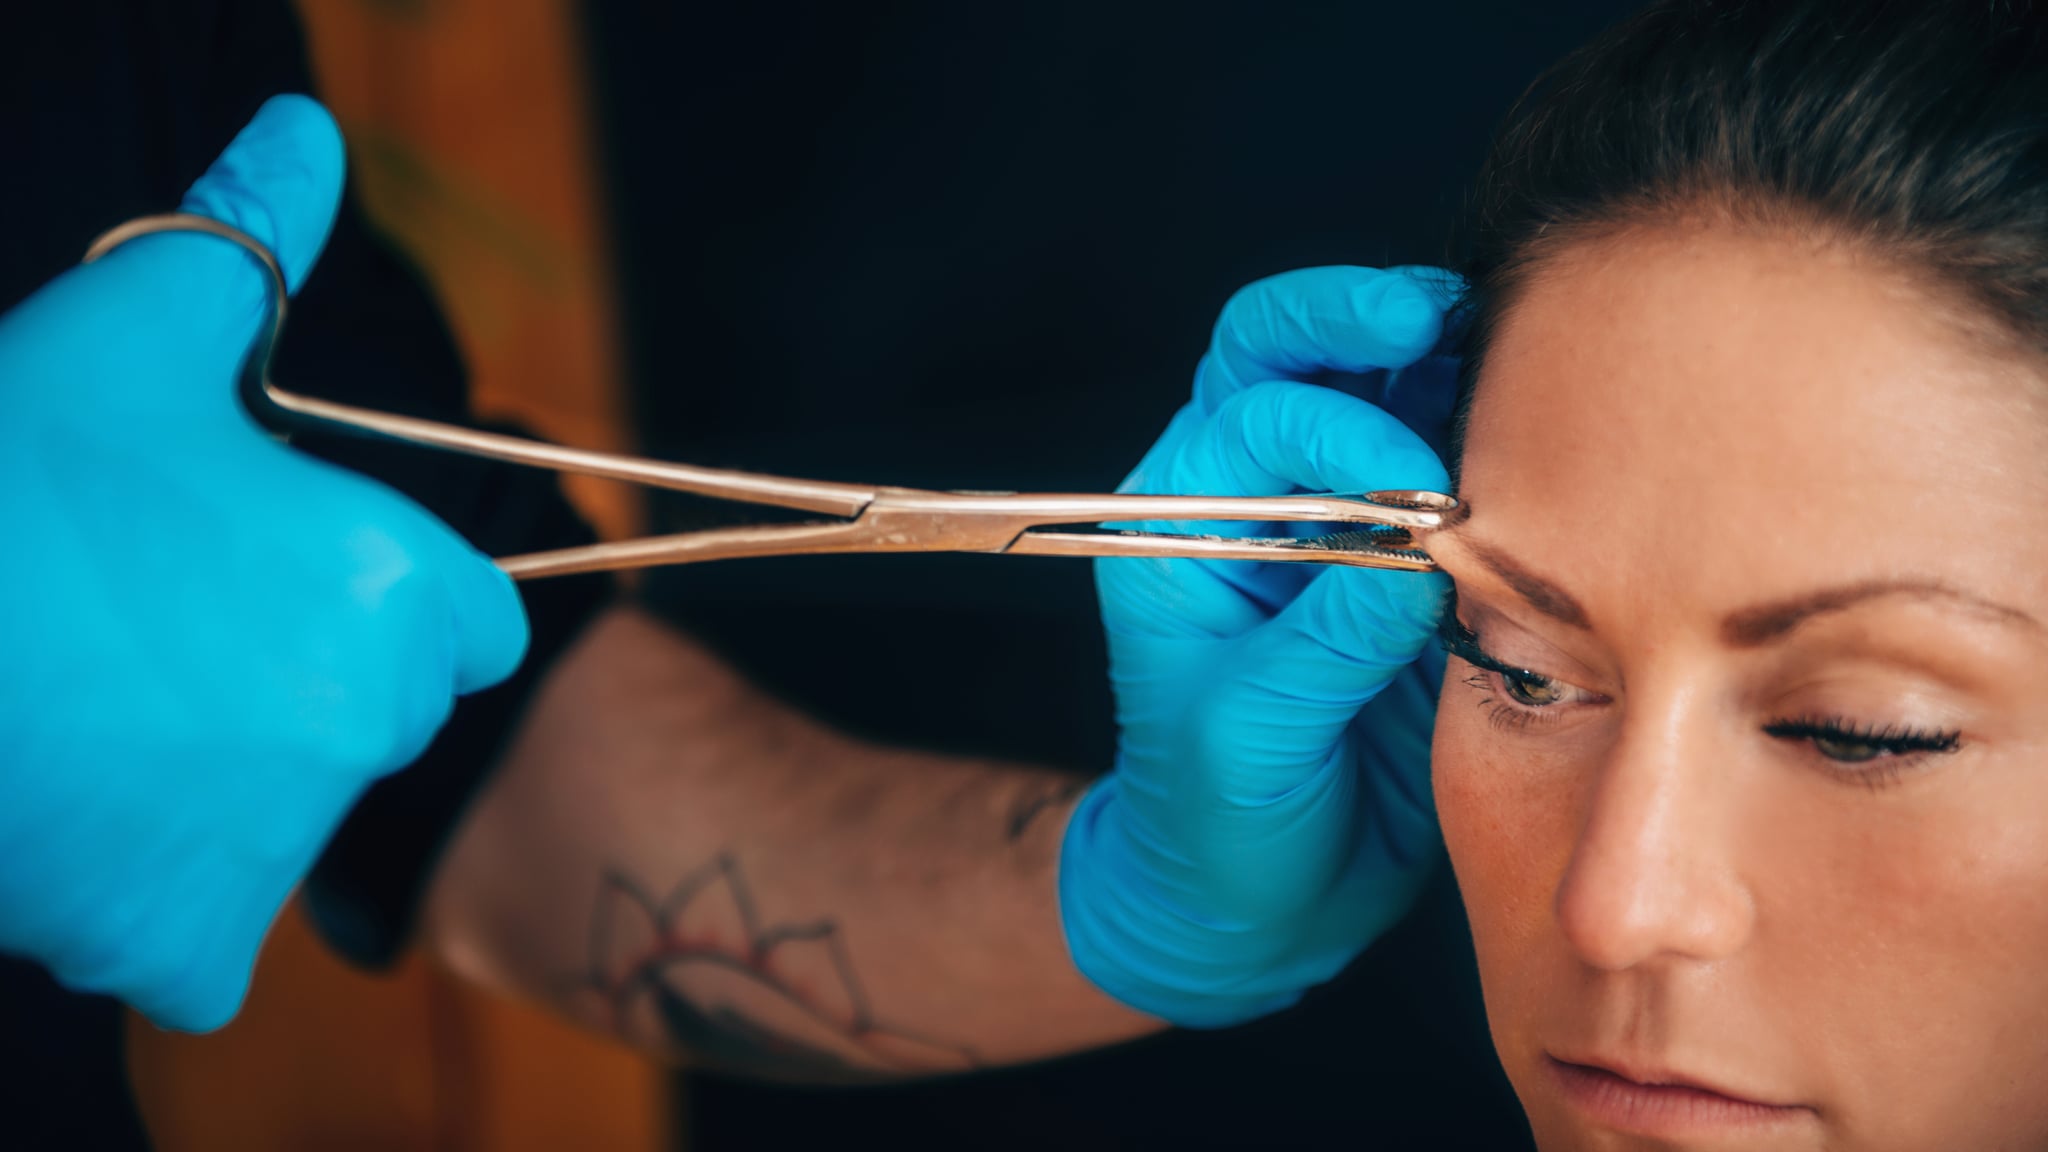 Beautiful young woman getting her eyebrow pierced, body piercer wearing blue gloves